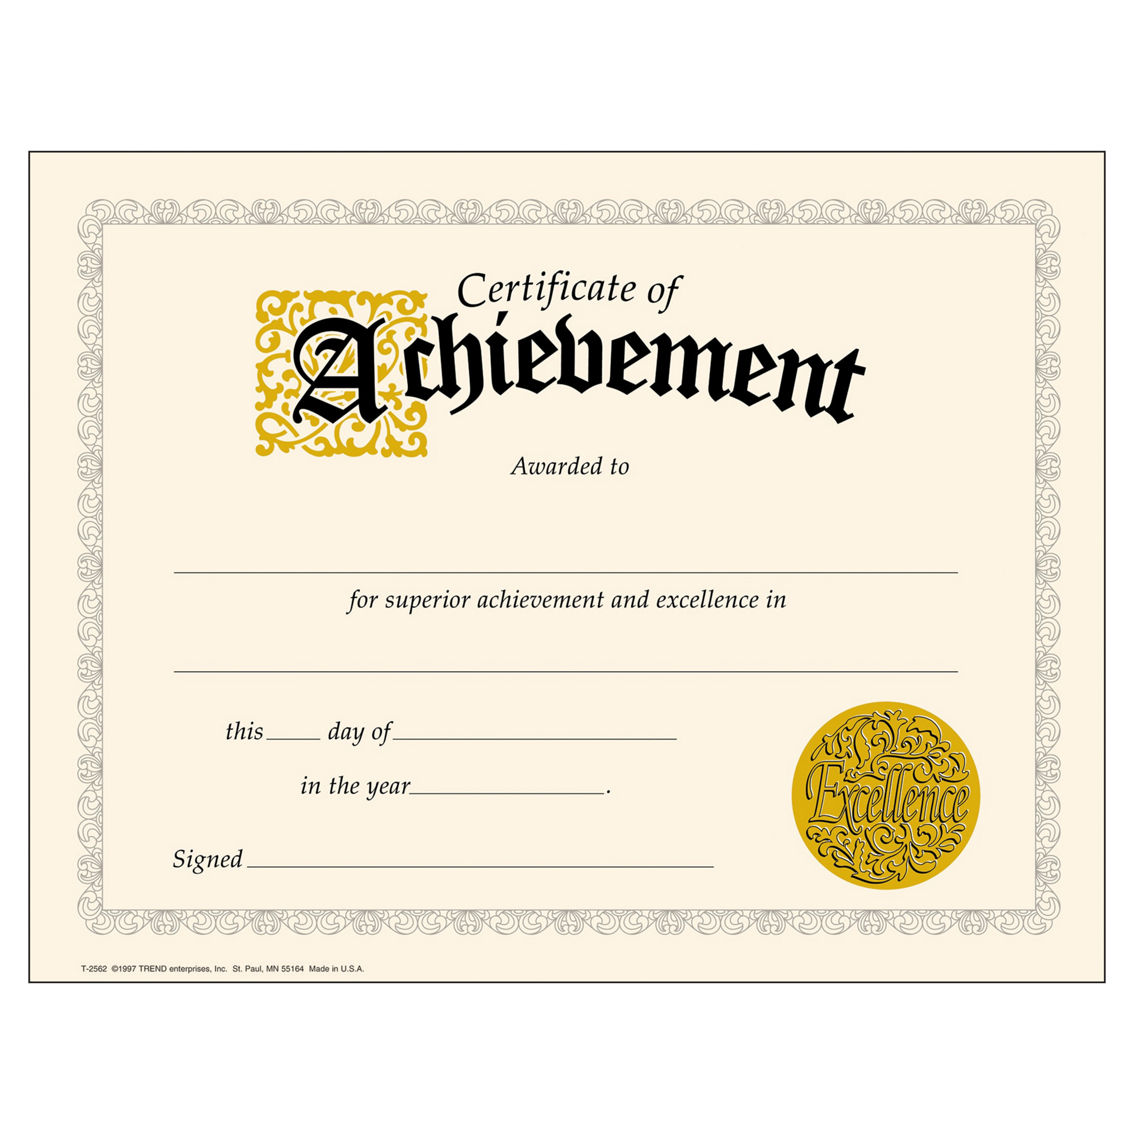 TREND Certificate of Achievement Classic Certificates, 30 Per Pack, 6 Packs - Image 2 of 2